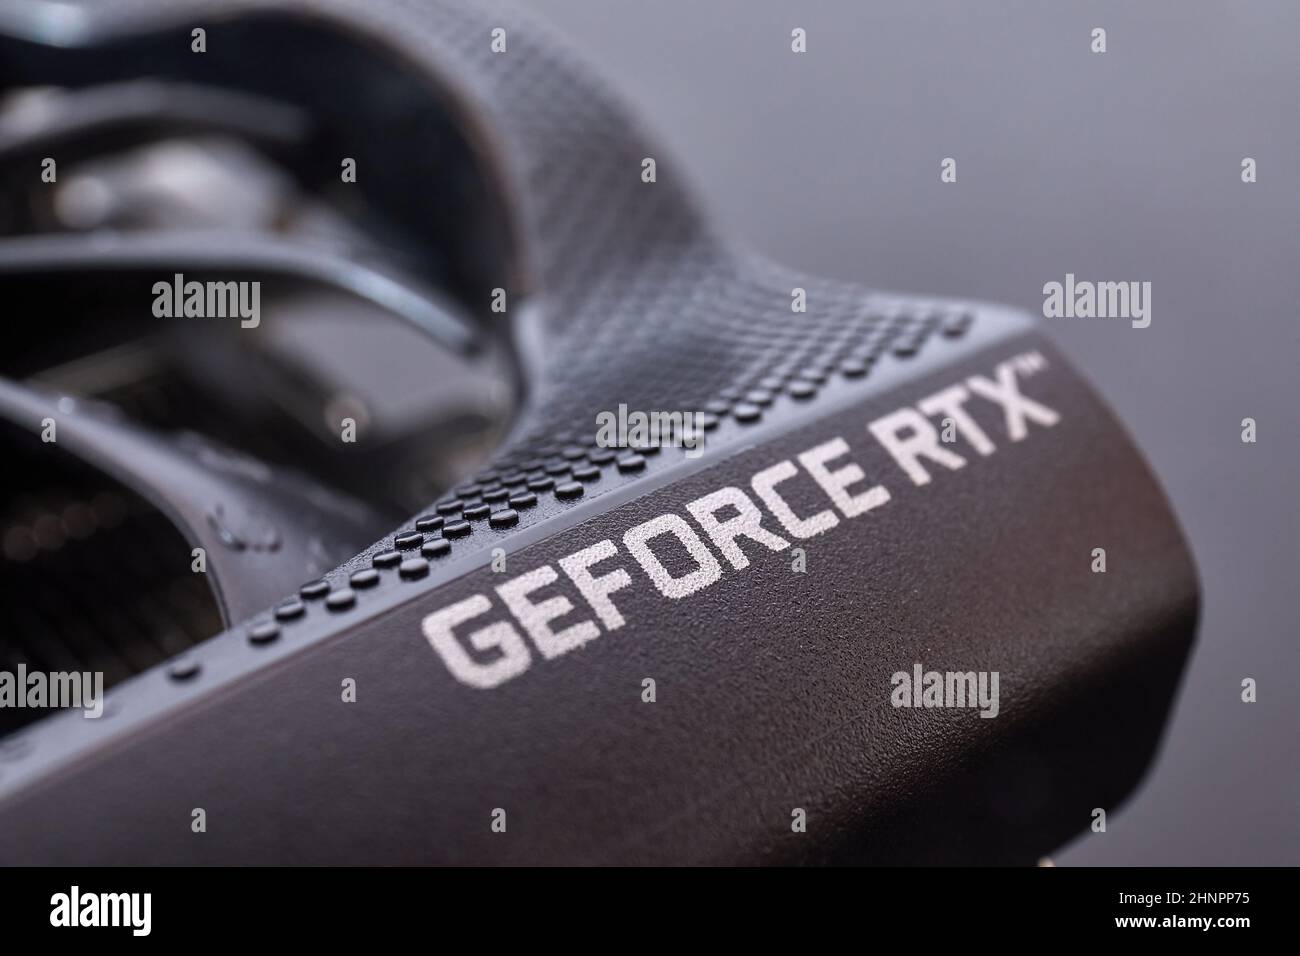 Geforce RTX 3080 Nvidia GPU graphics card detail Stock Photo